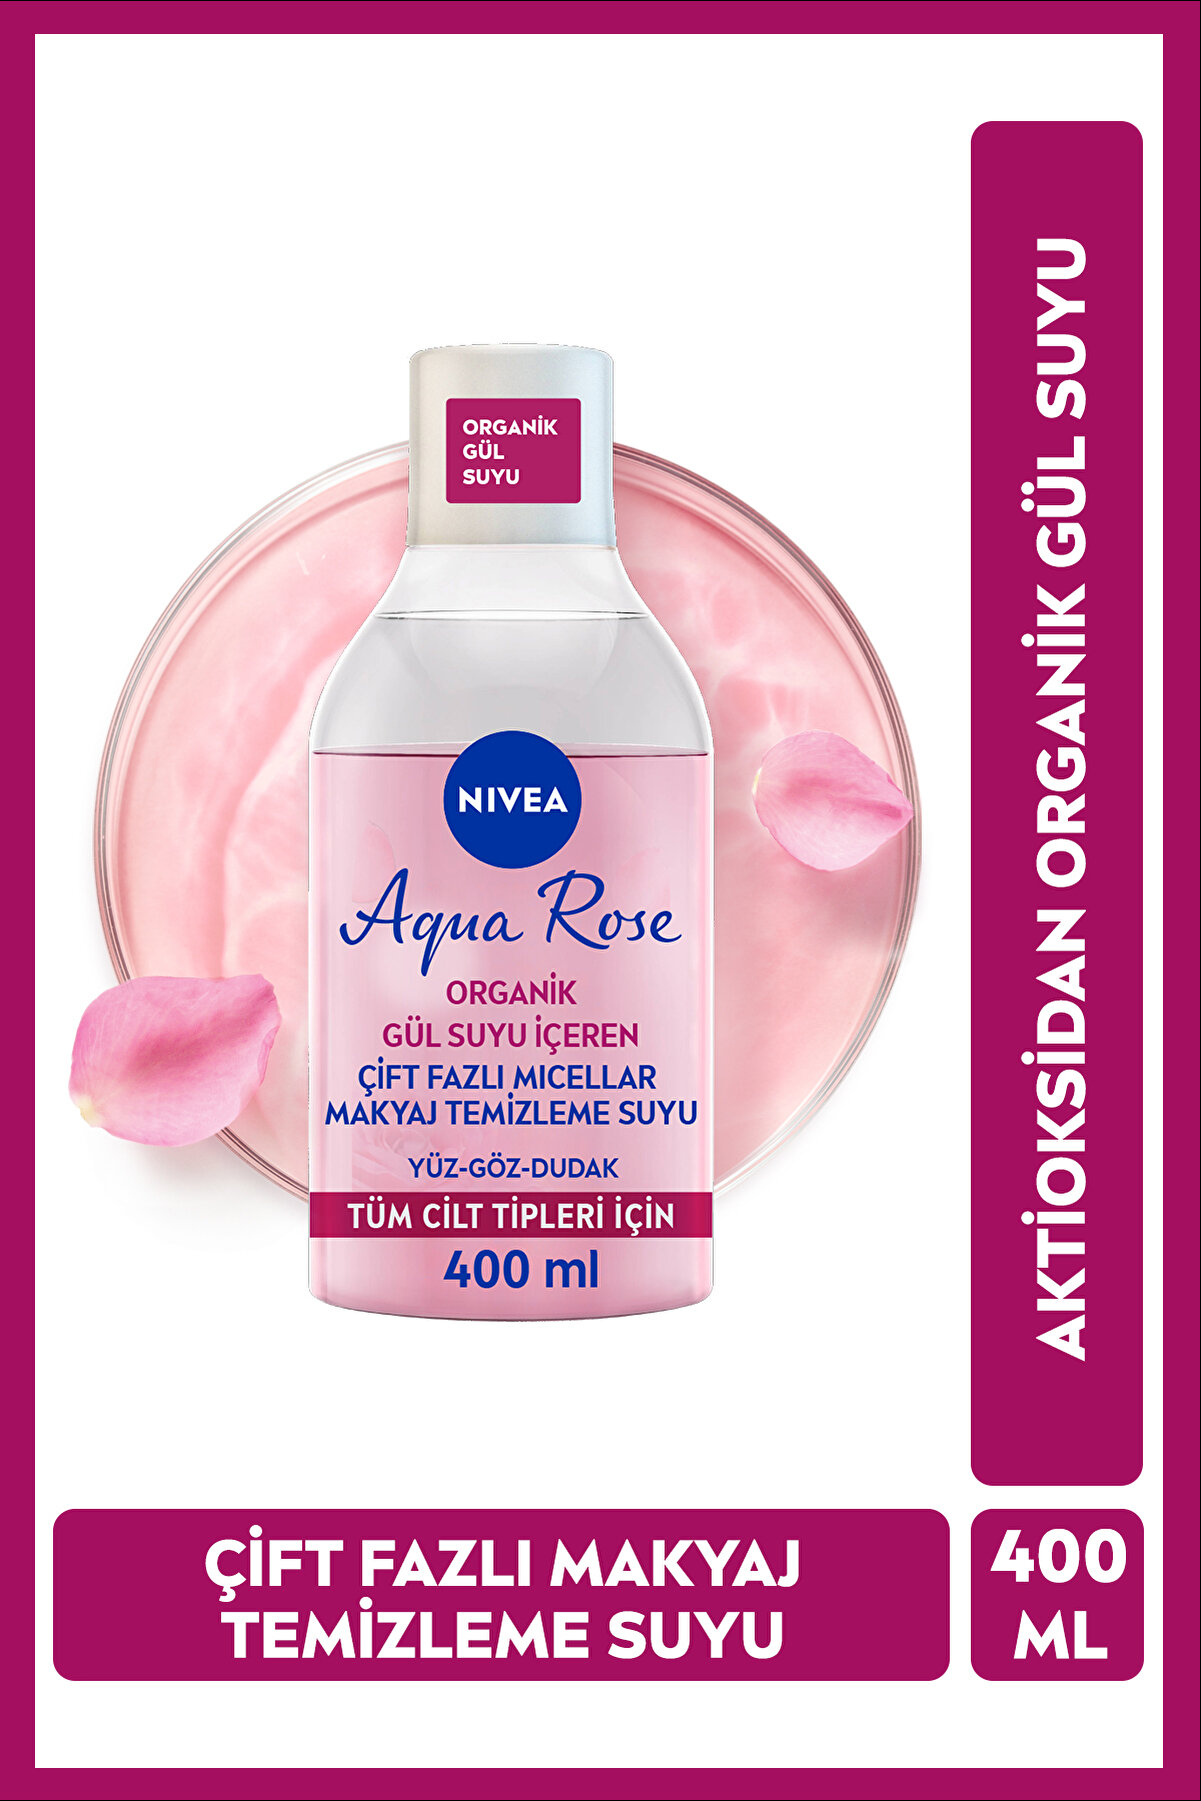 Nivea Aqua Rose Organik Makyaj Gül Suyu Içeren Çift Fazlı Temizleme Suyu 400 ml